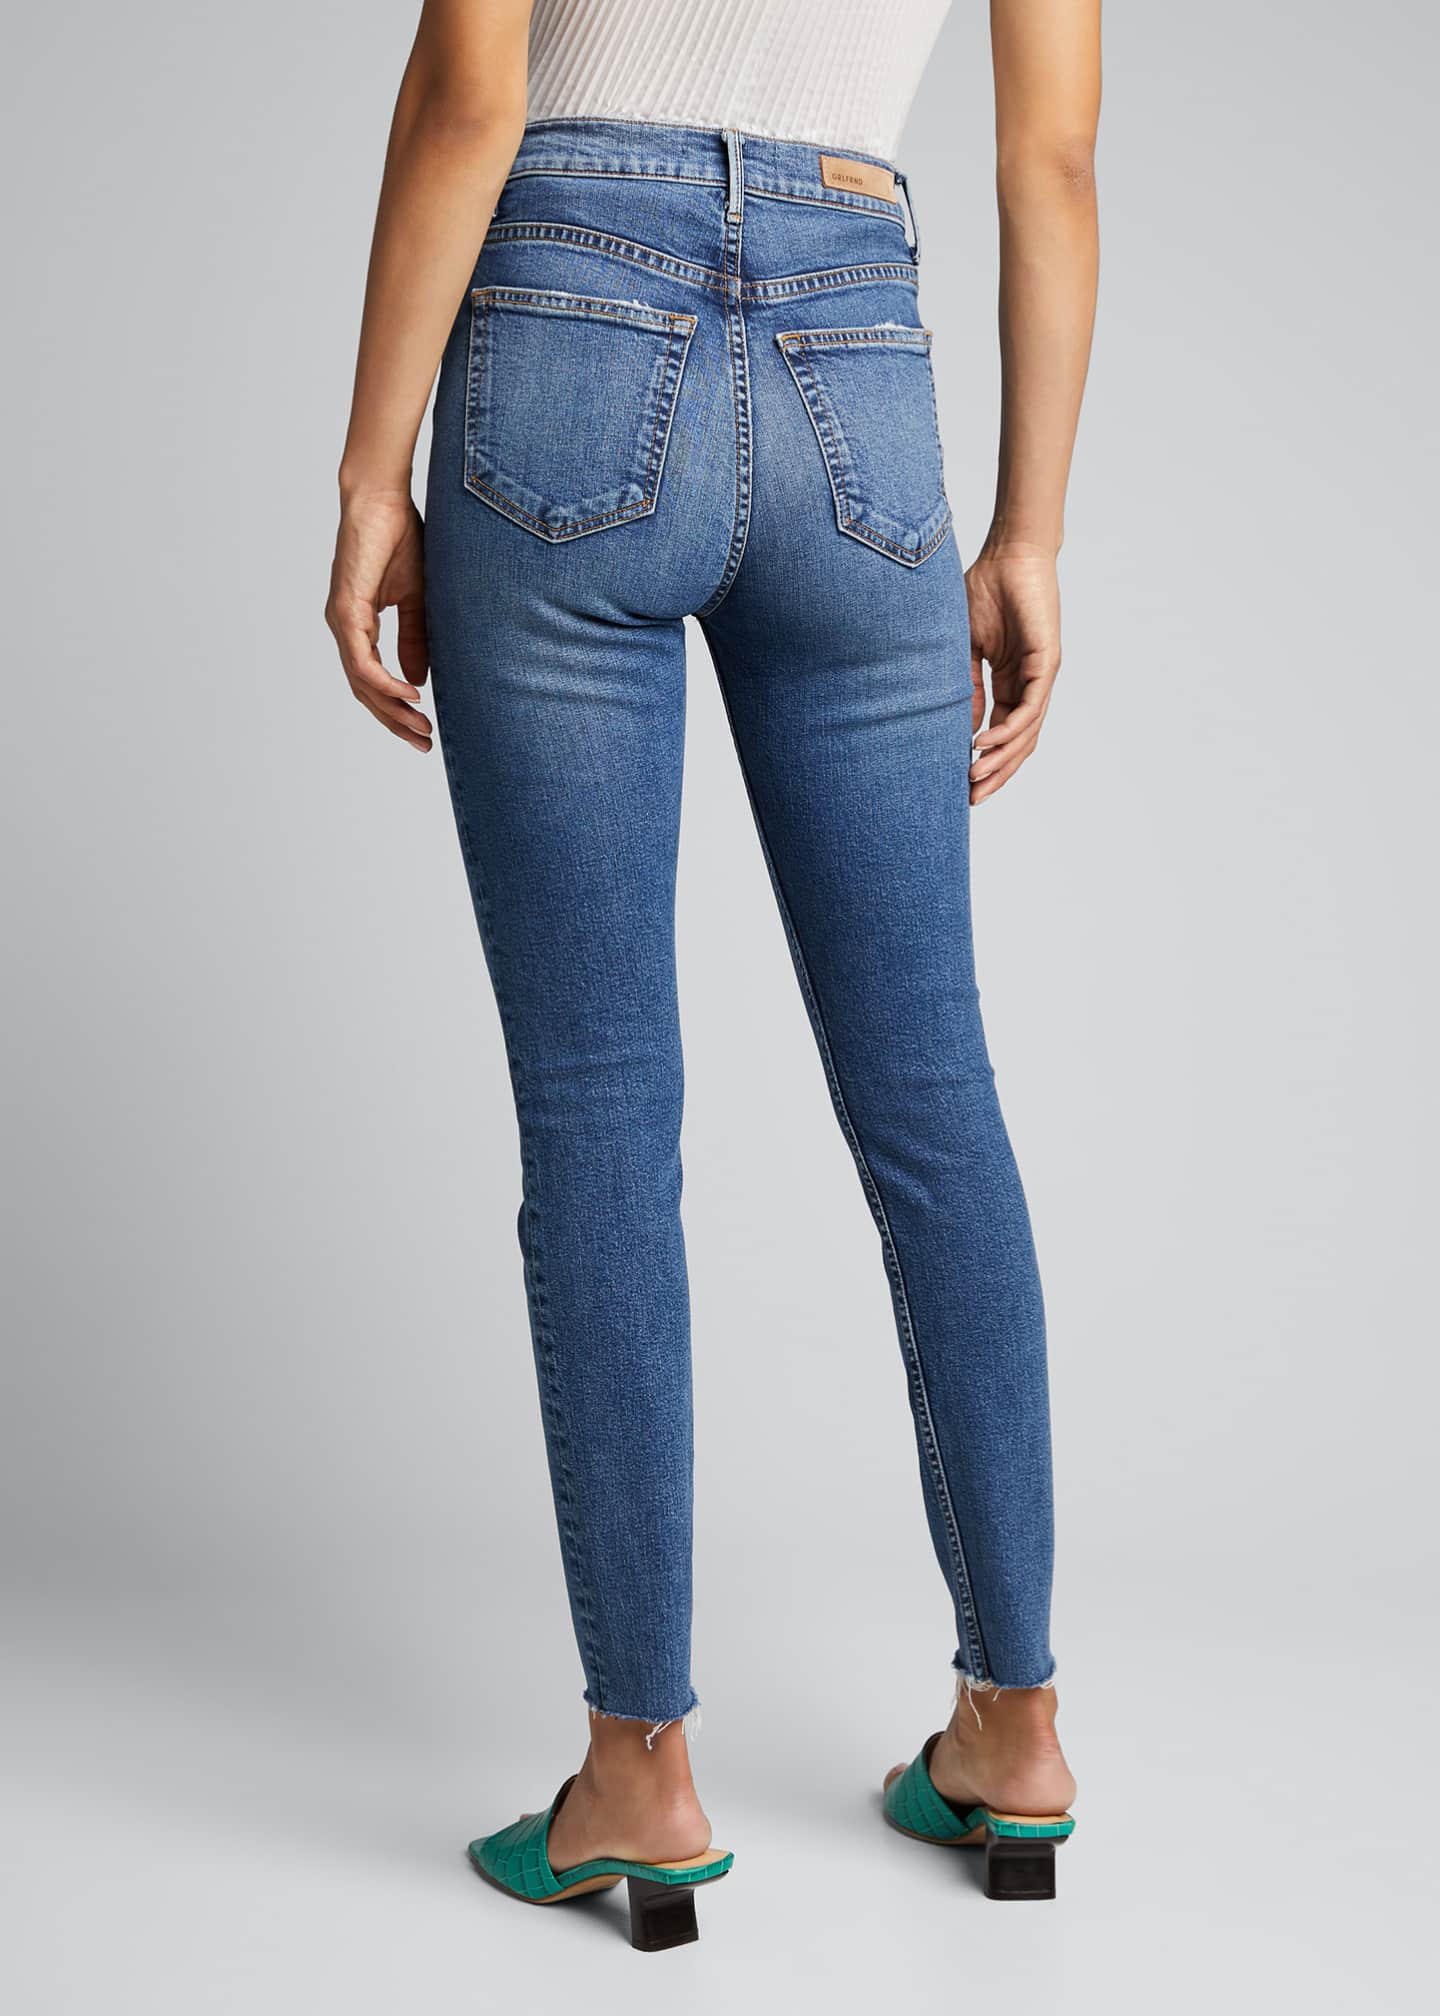 grlfrnd kendall jeans